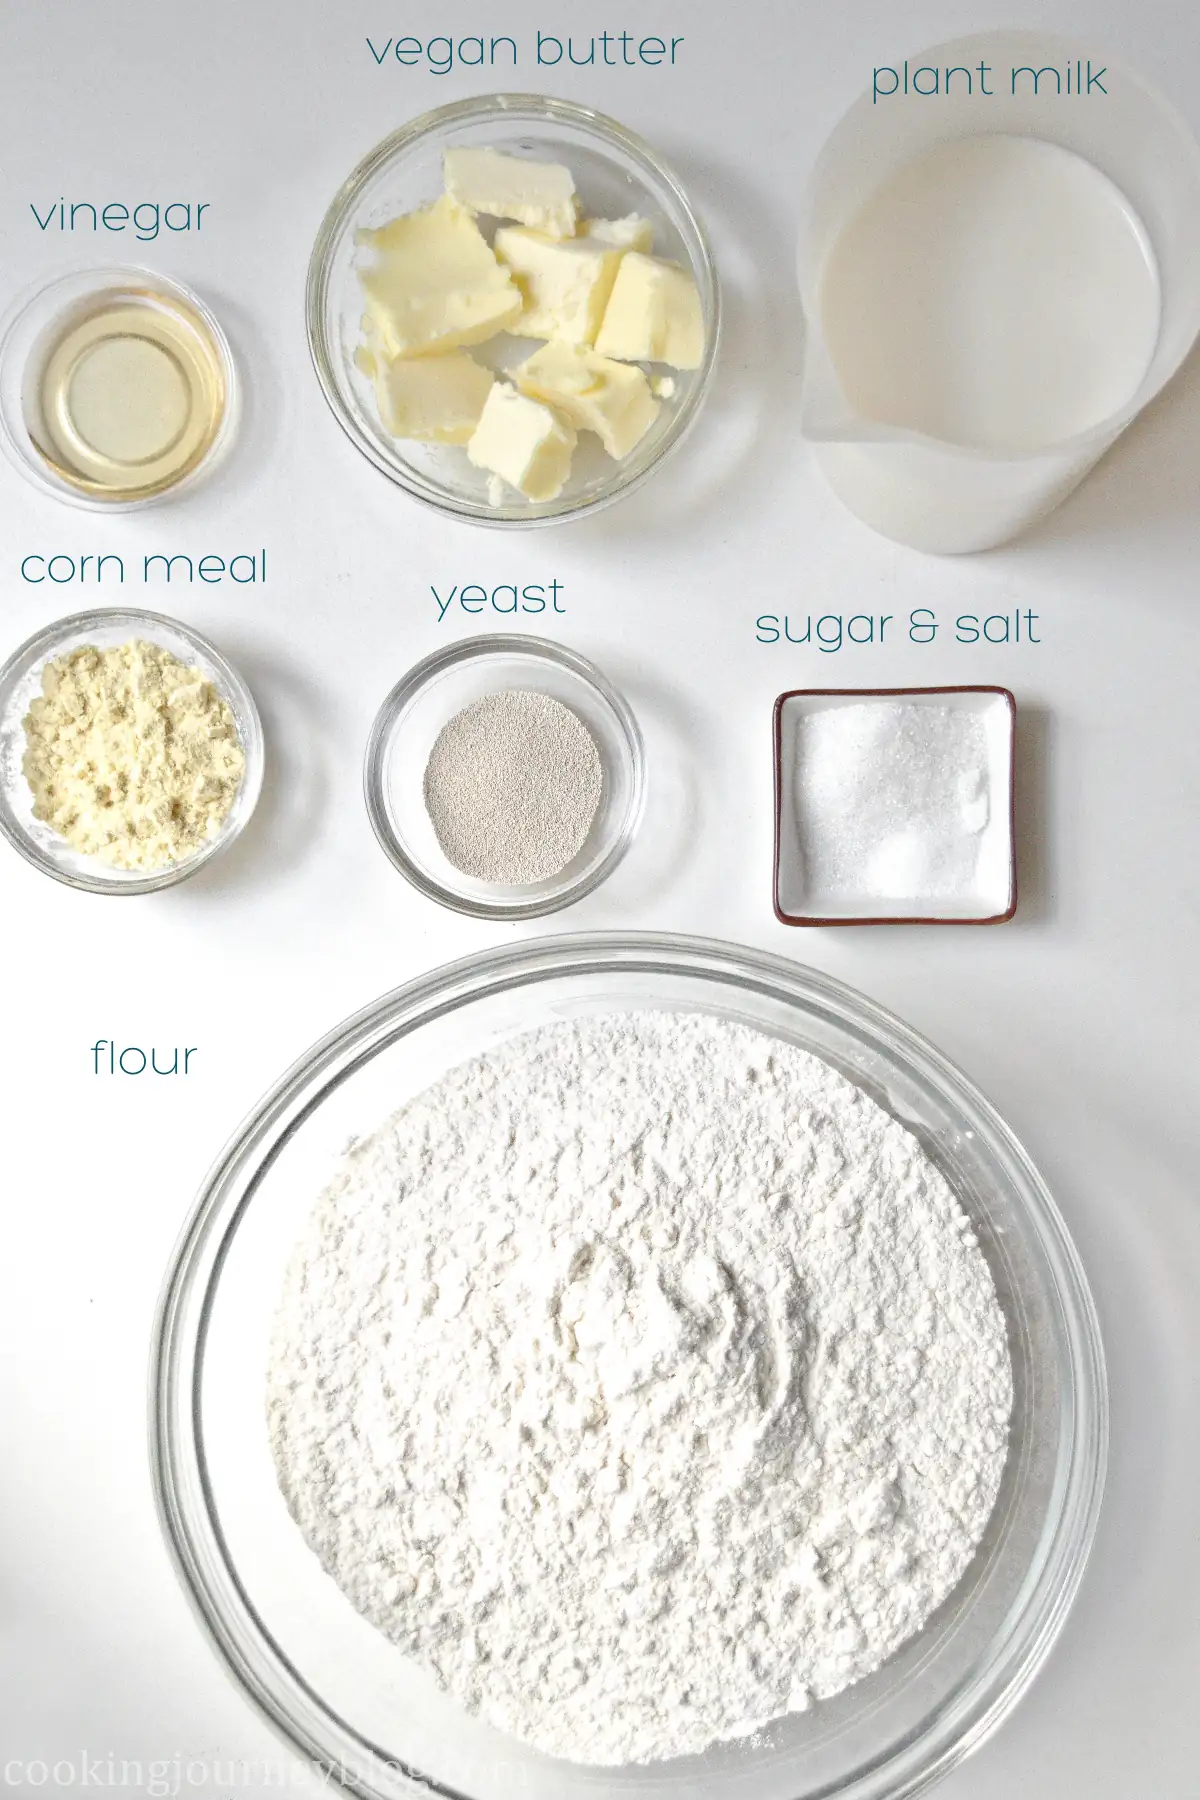 Ingredients for vegan English muffins: vinegar, butter, milk corn meal, yeast, sugar and salt, flour